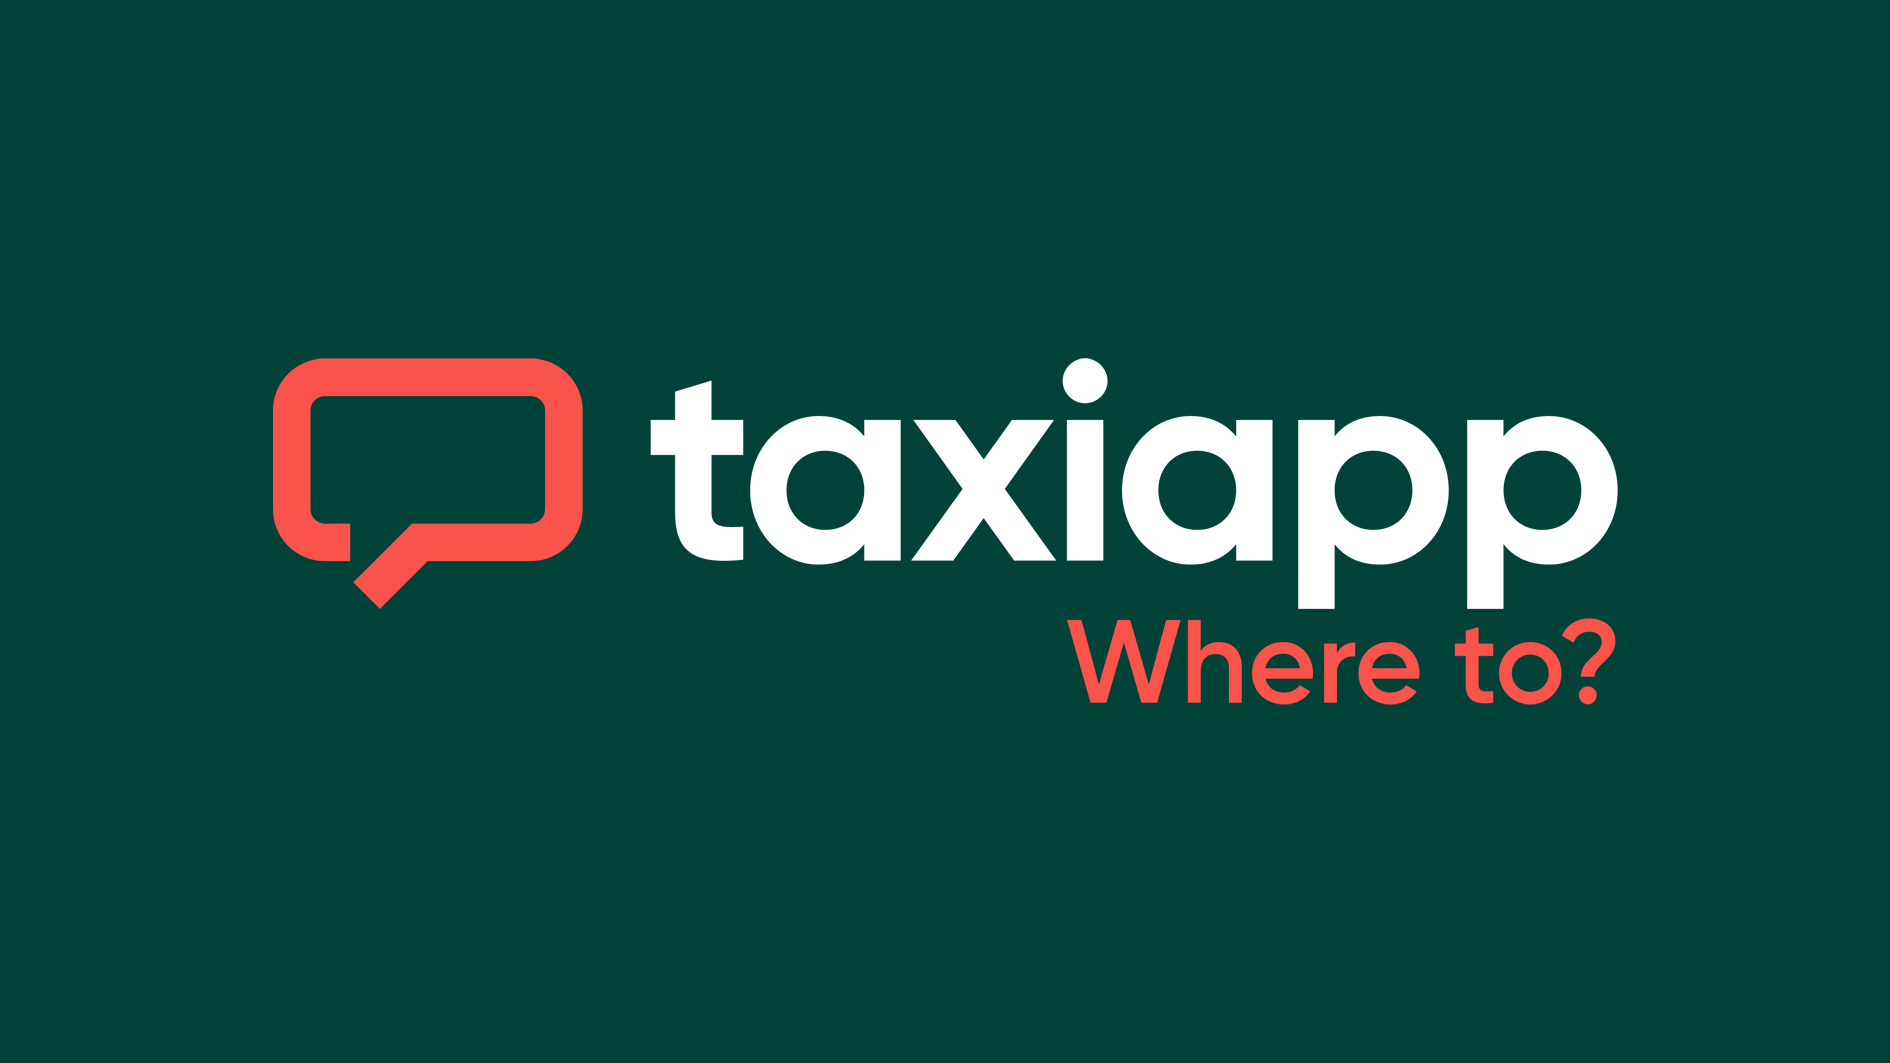 gCompany-branding-taxiapp-logo-green